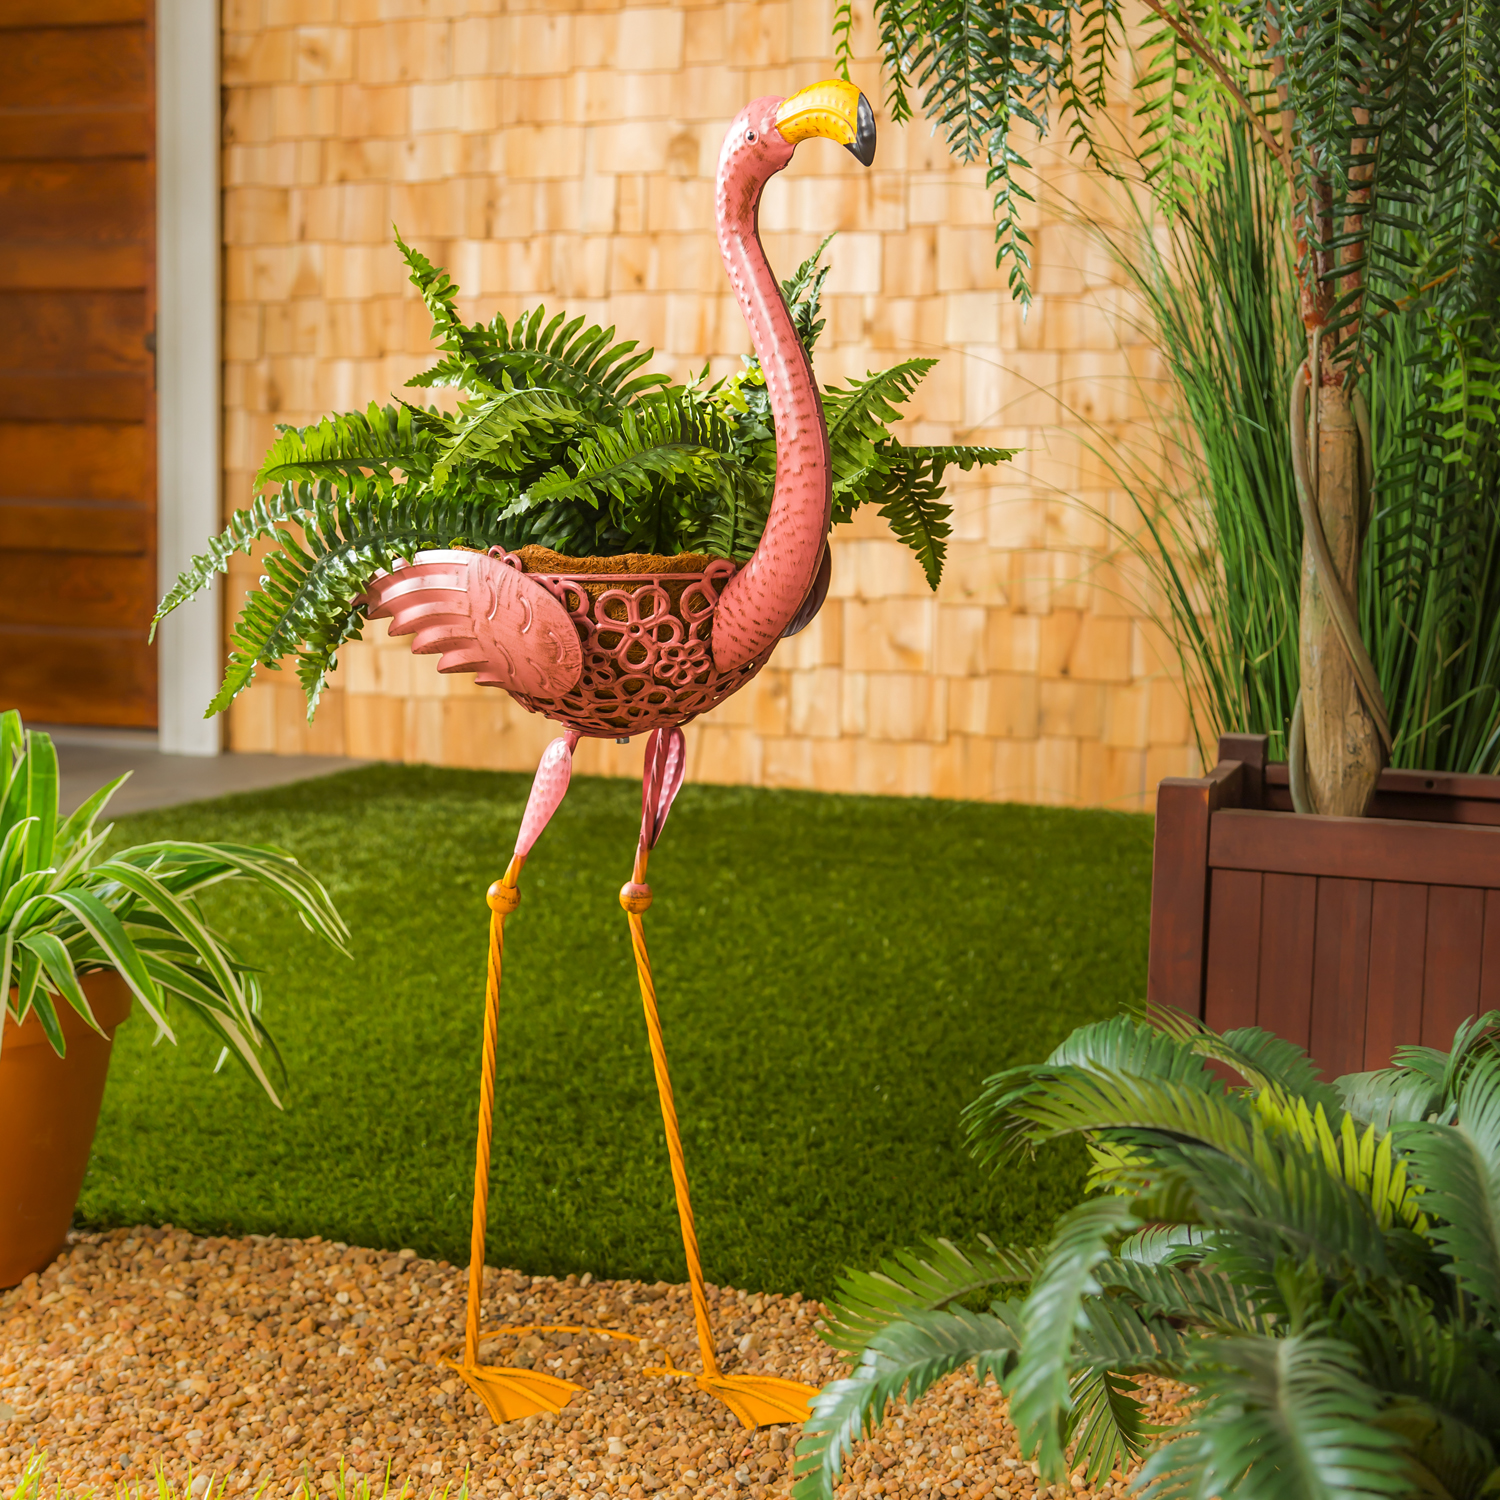 Evergreen Metal Flamingo Planter, 18.9'' x 11.4'' x 37.4'' inches. - image 2 of 3